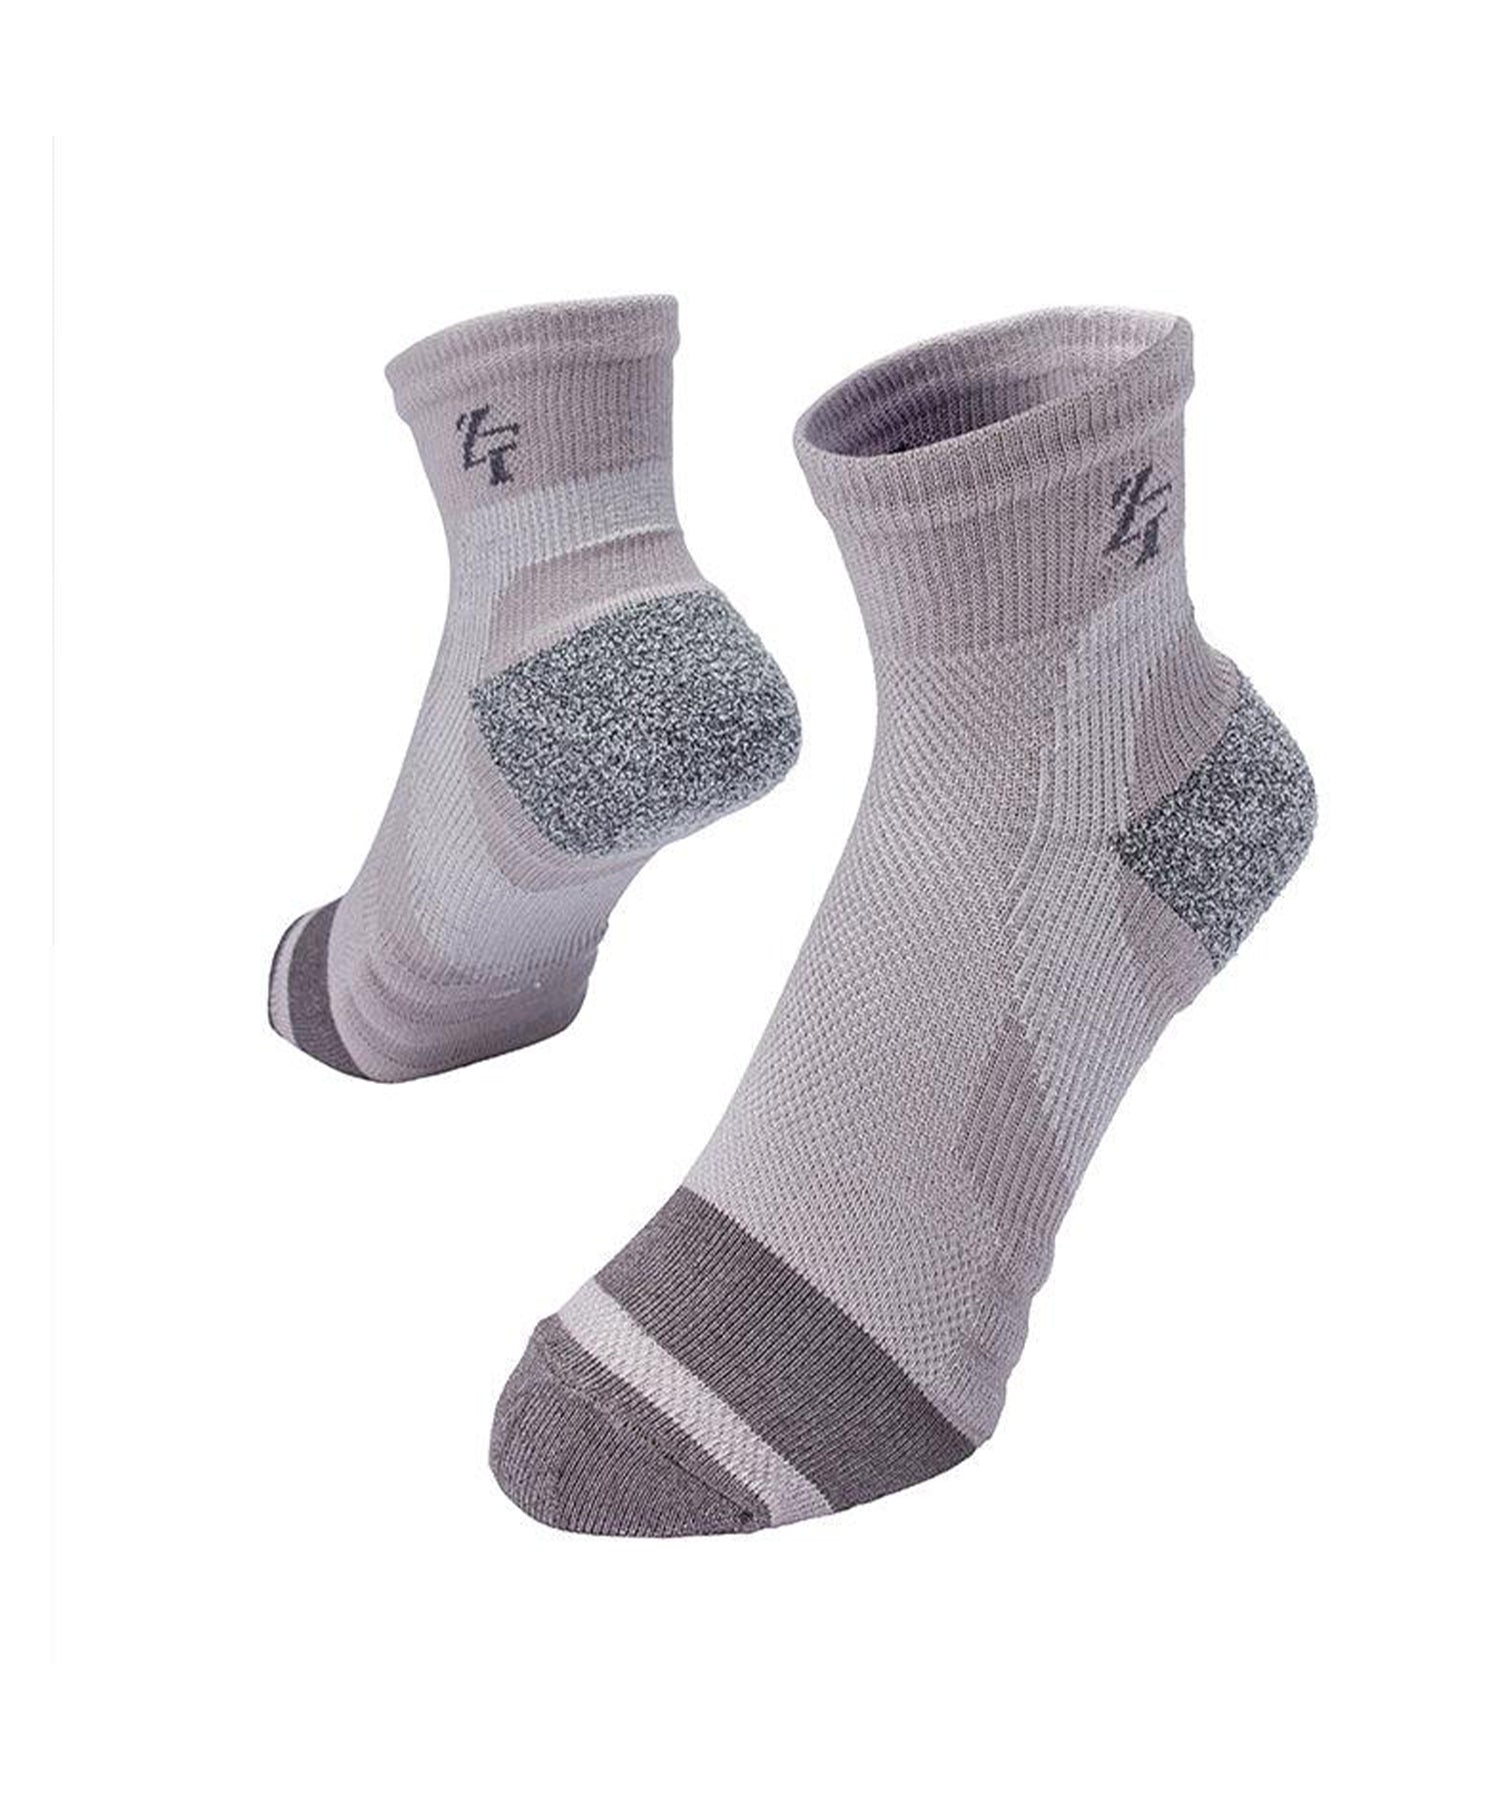 Nano hybrid socks half middle